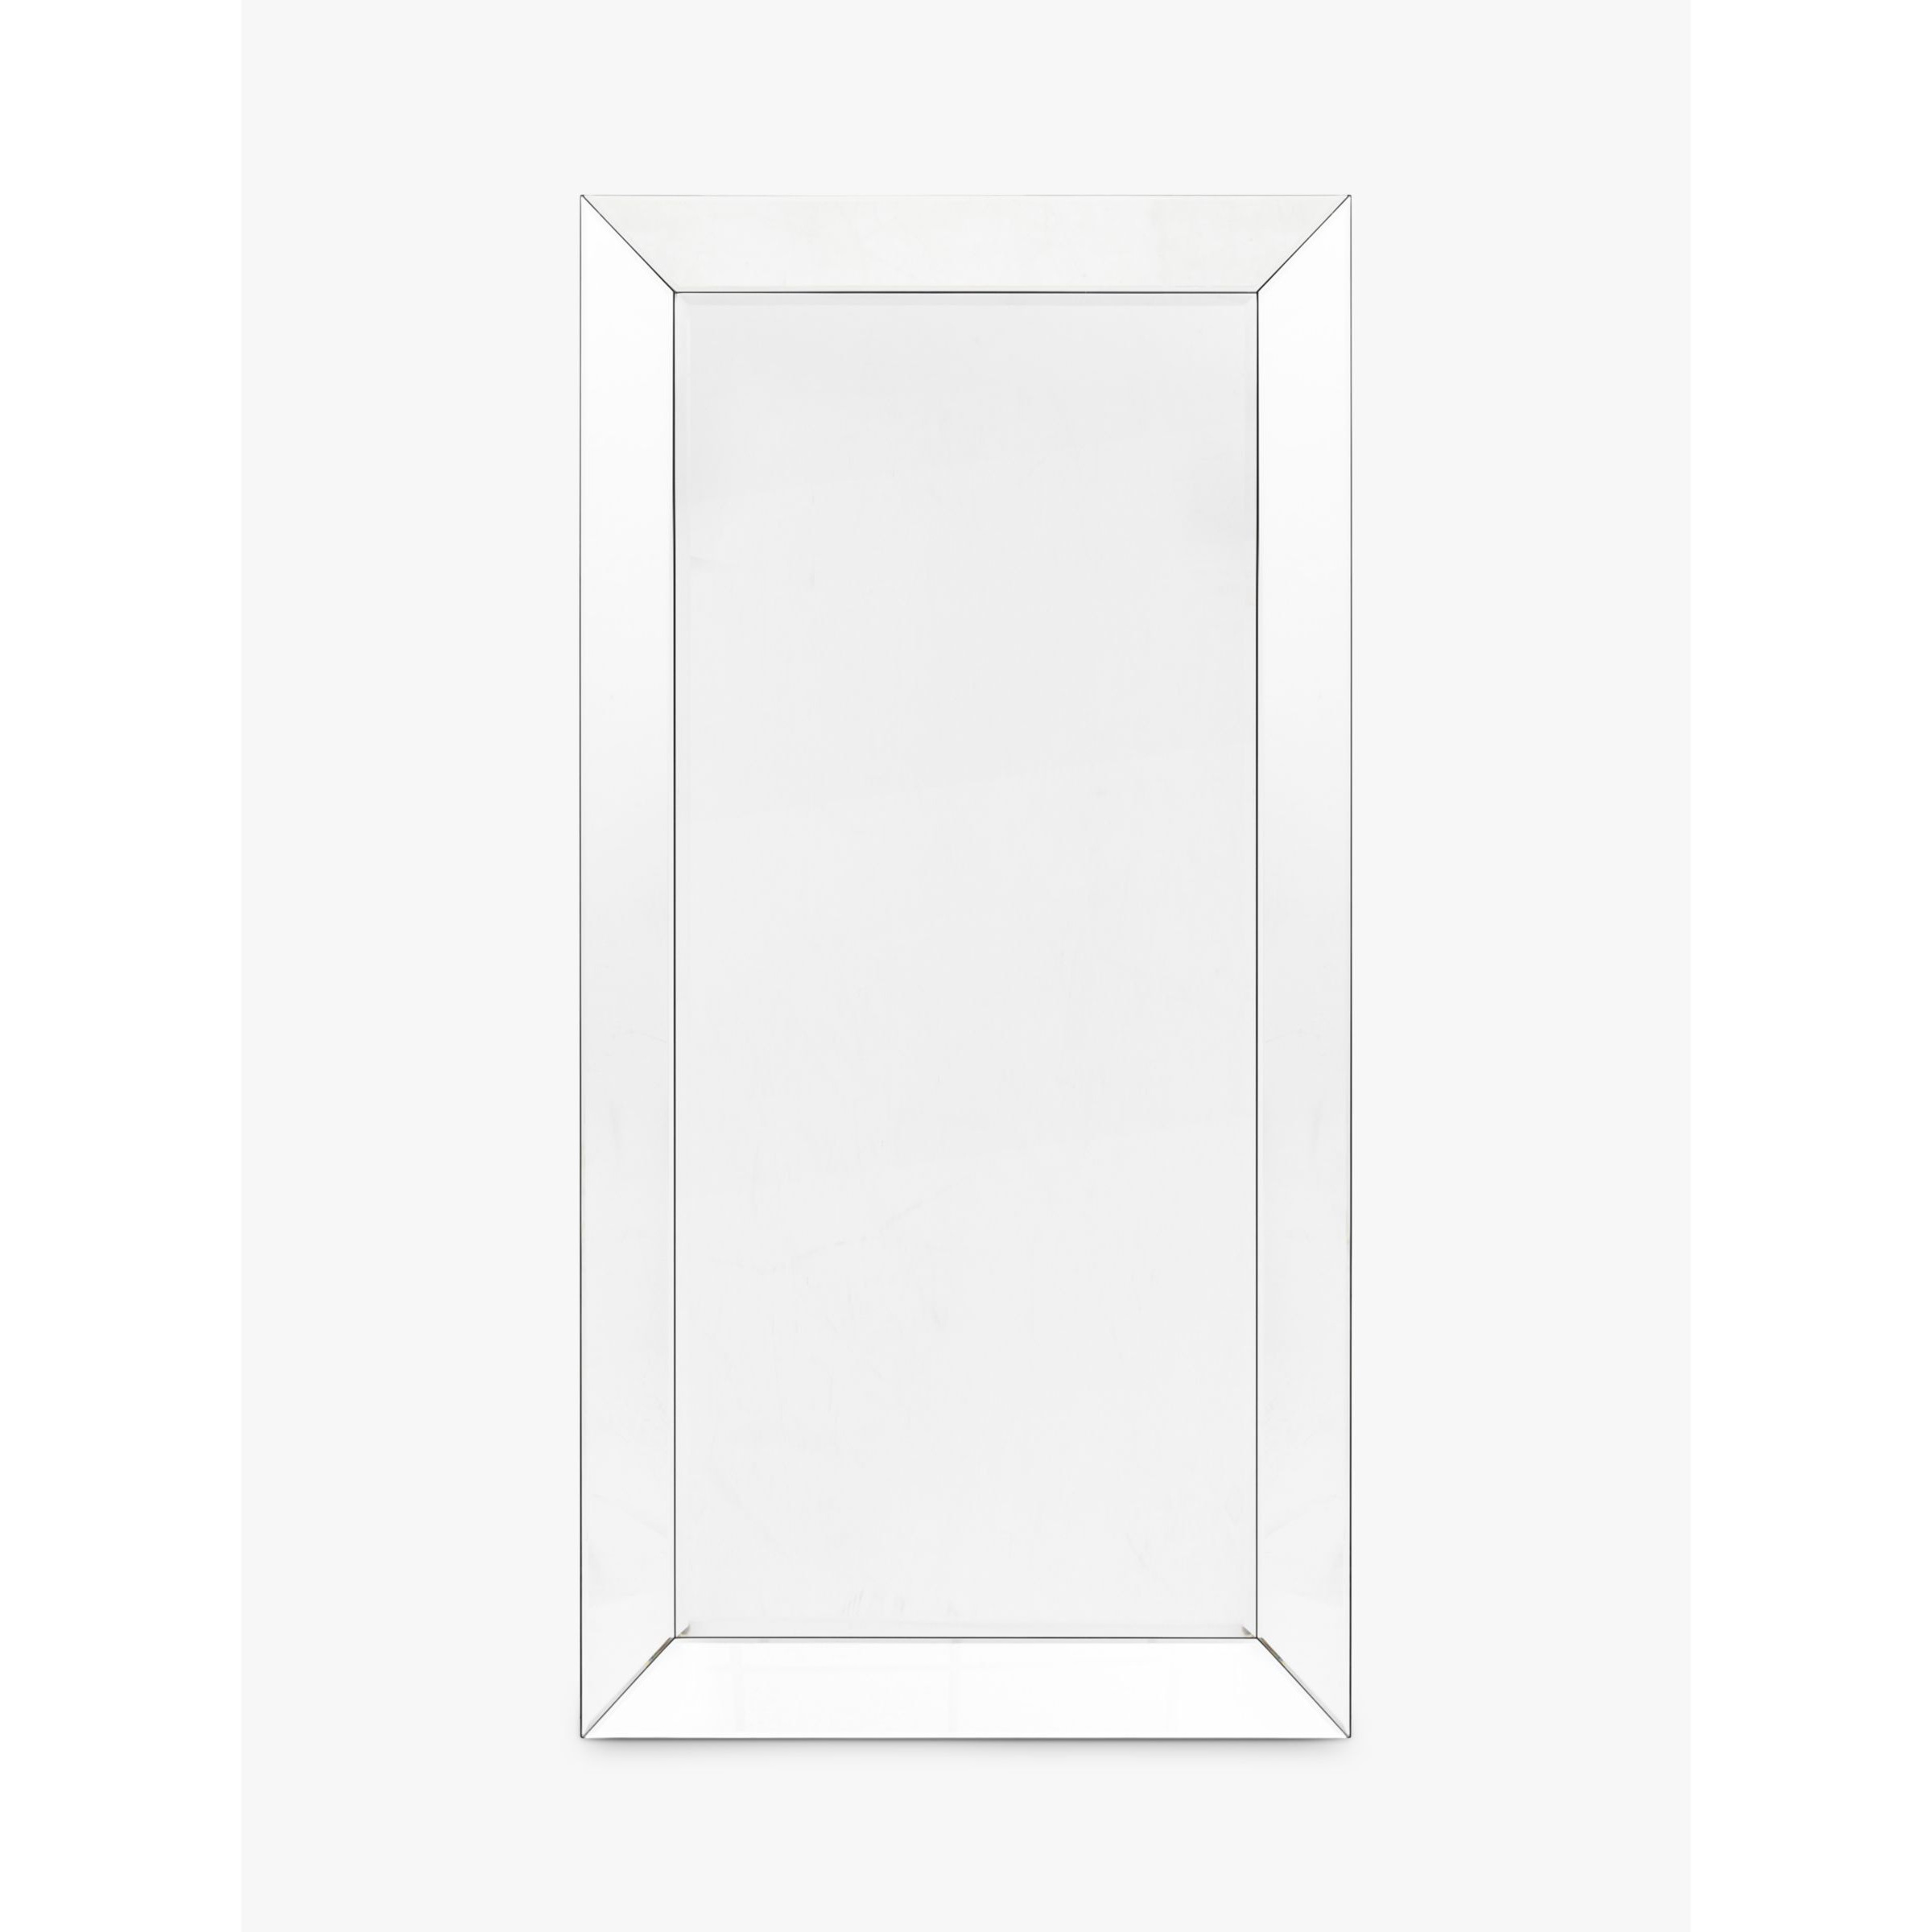 Gallery Direct Salinas Rectangular Full-Length Bevelled Glass Leaner Mirror, 180 x 90cm, Clear/Black - image 1